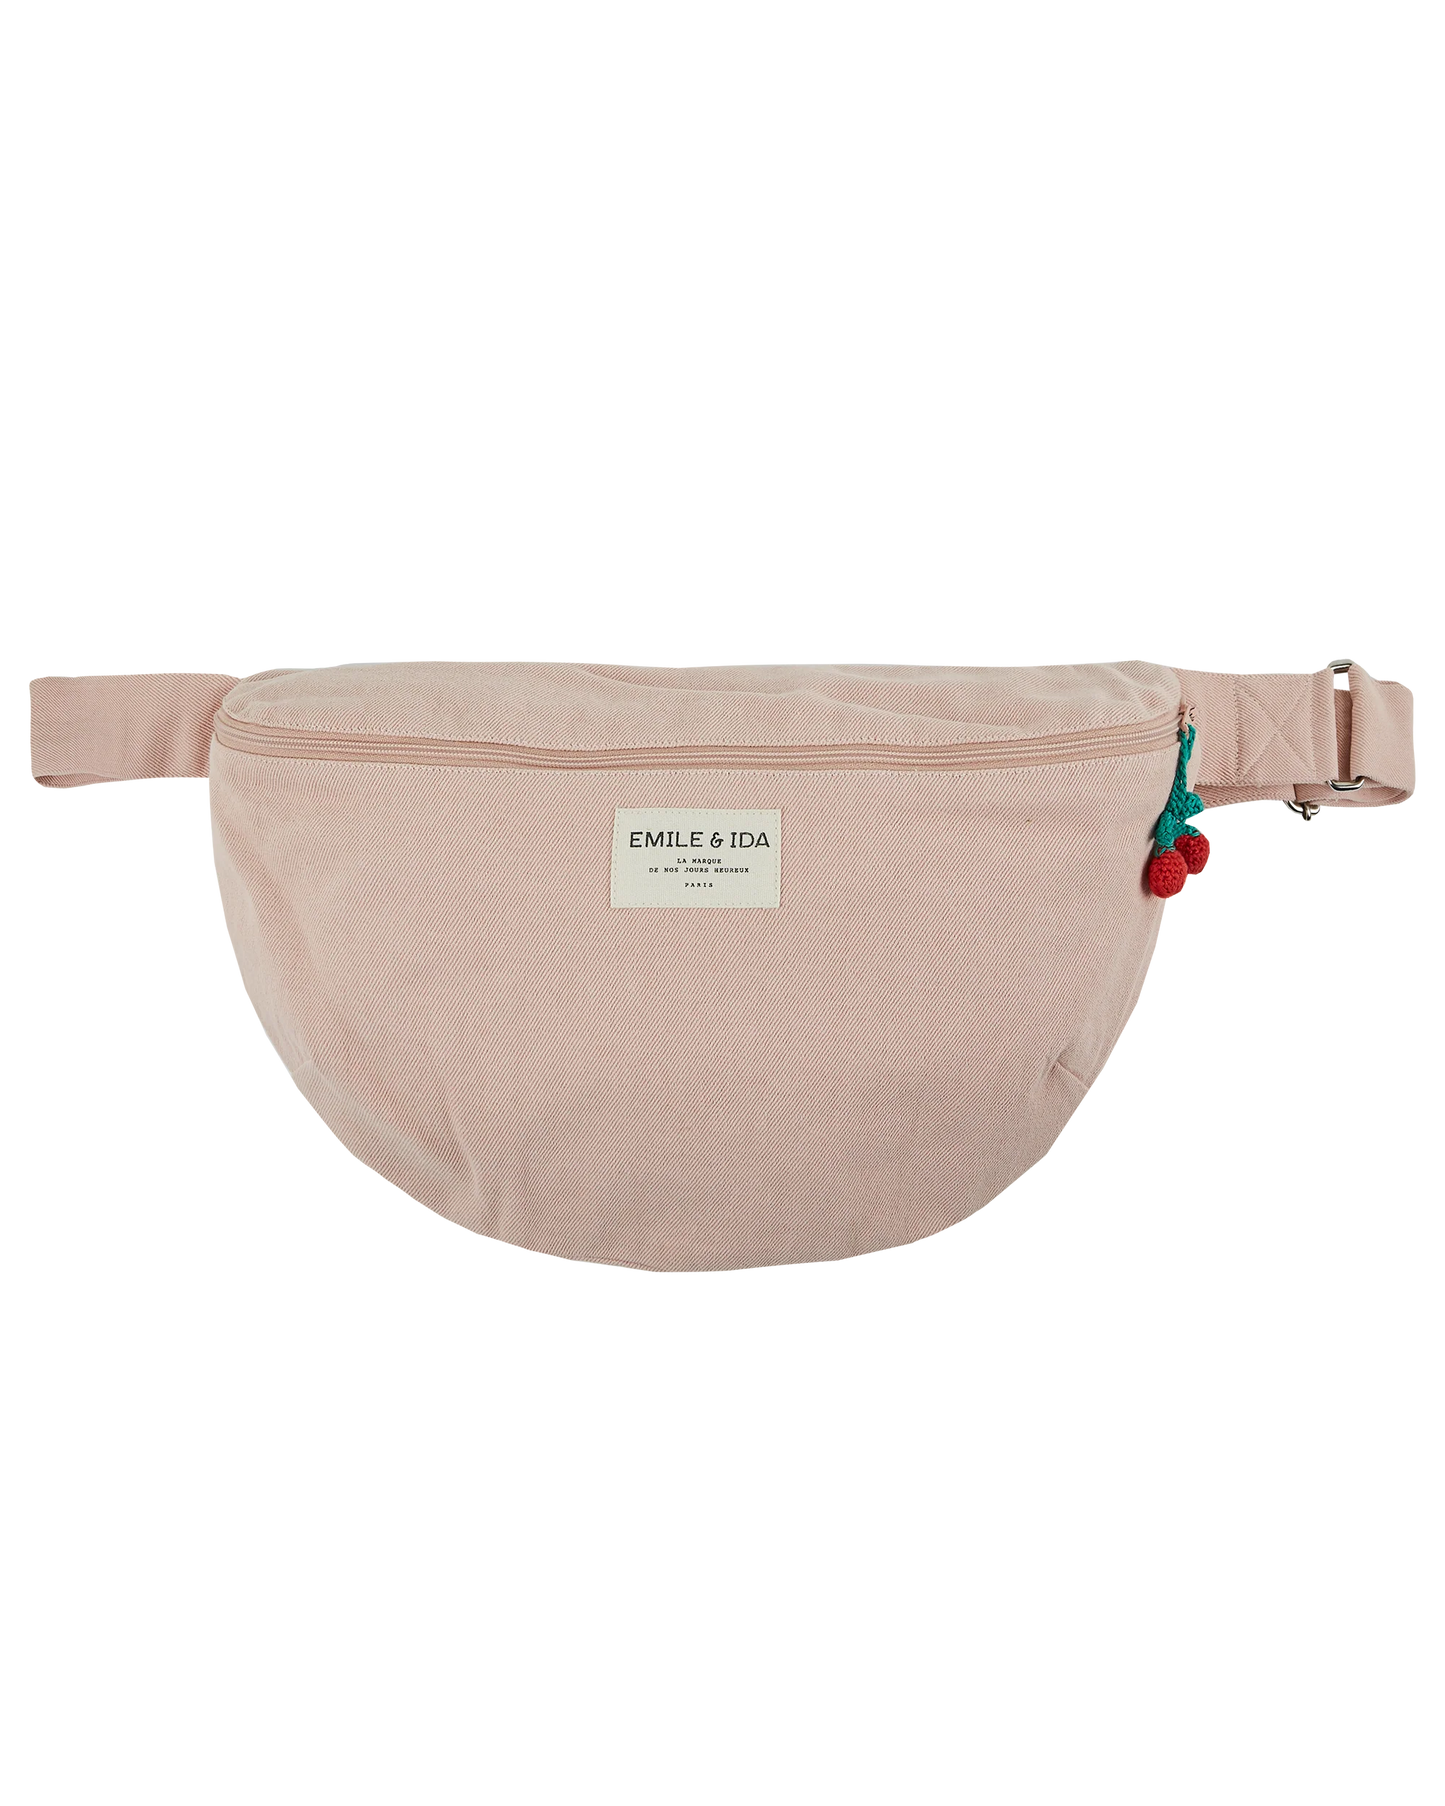 Blush pink cross body bag